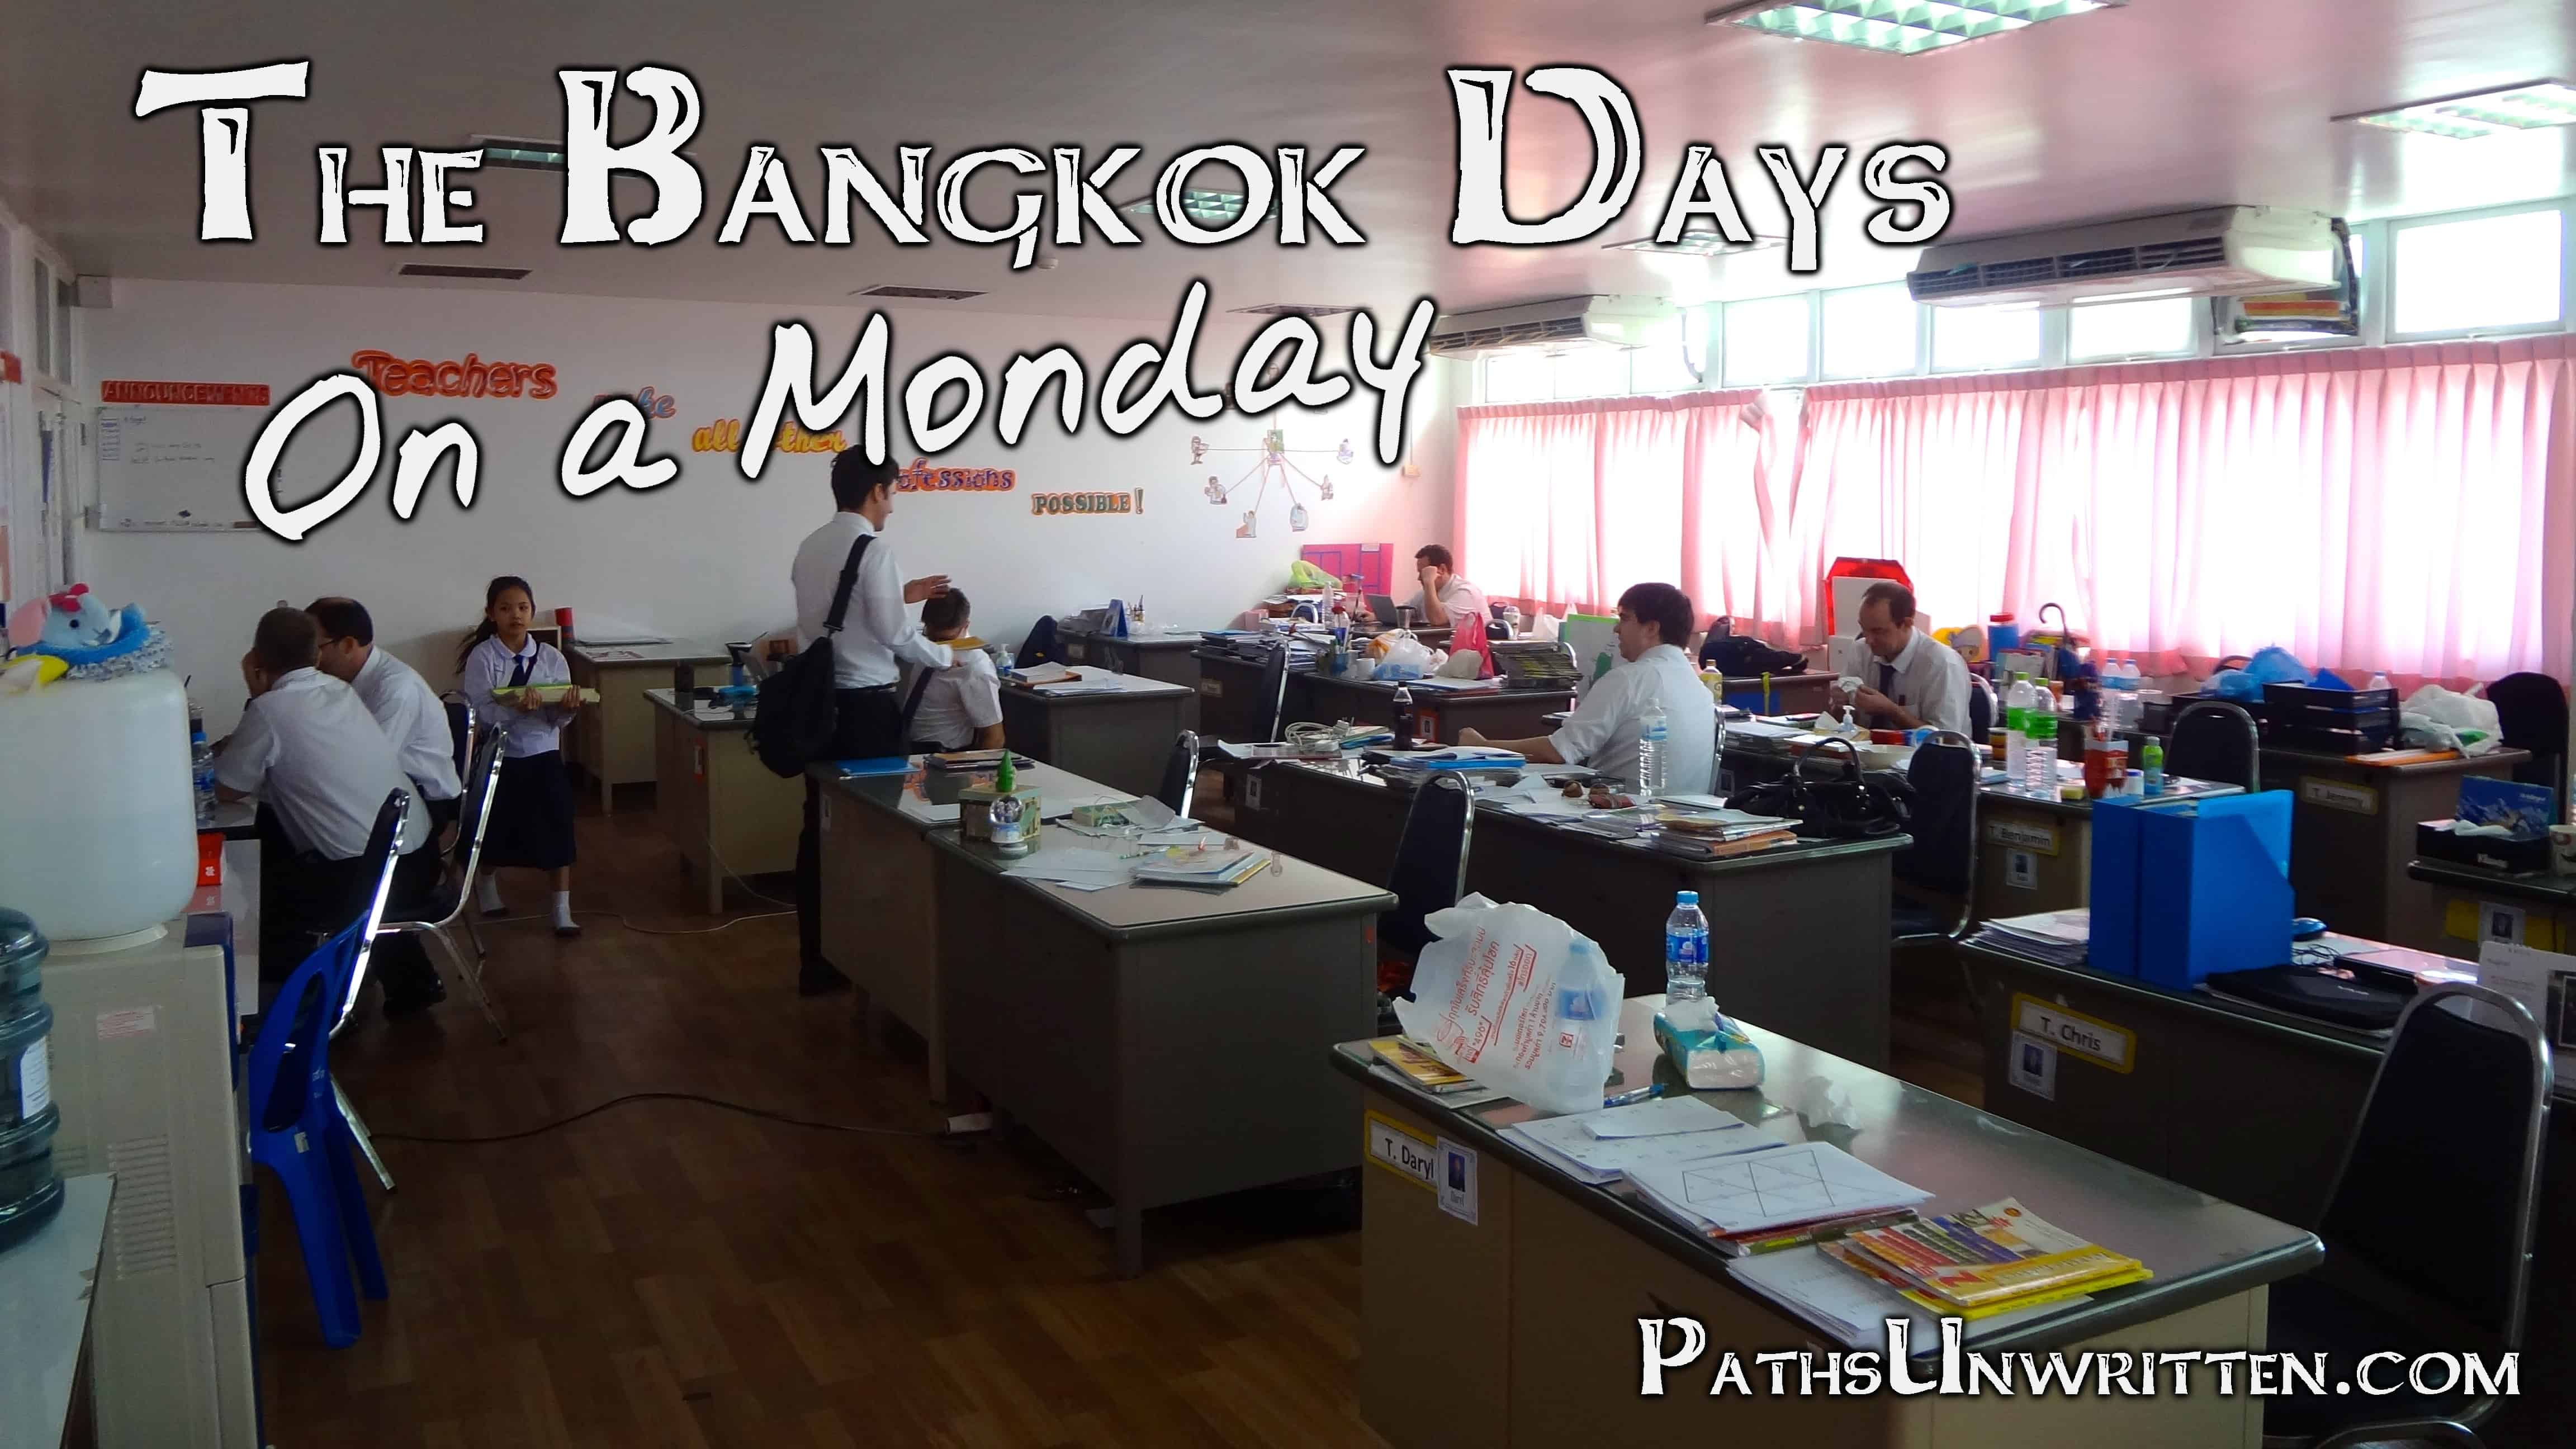 The Bangkok Days:  On a Monday